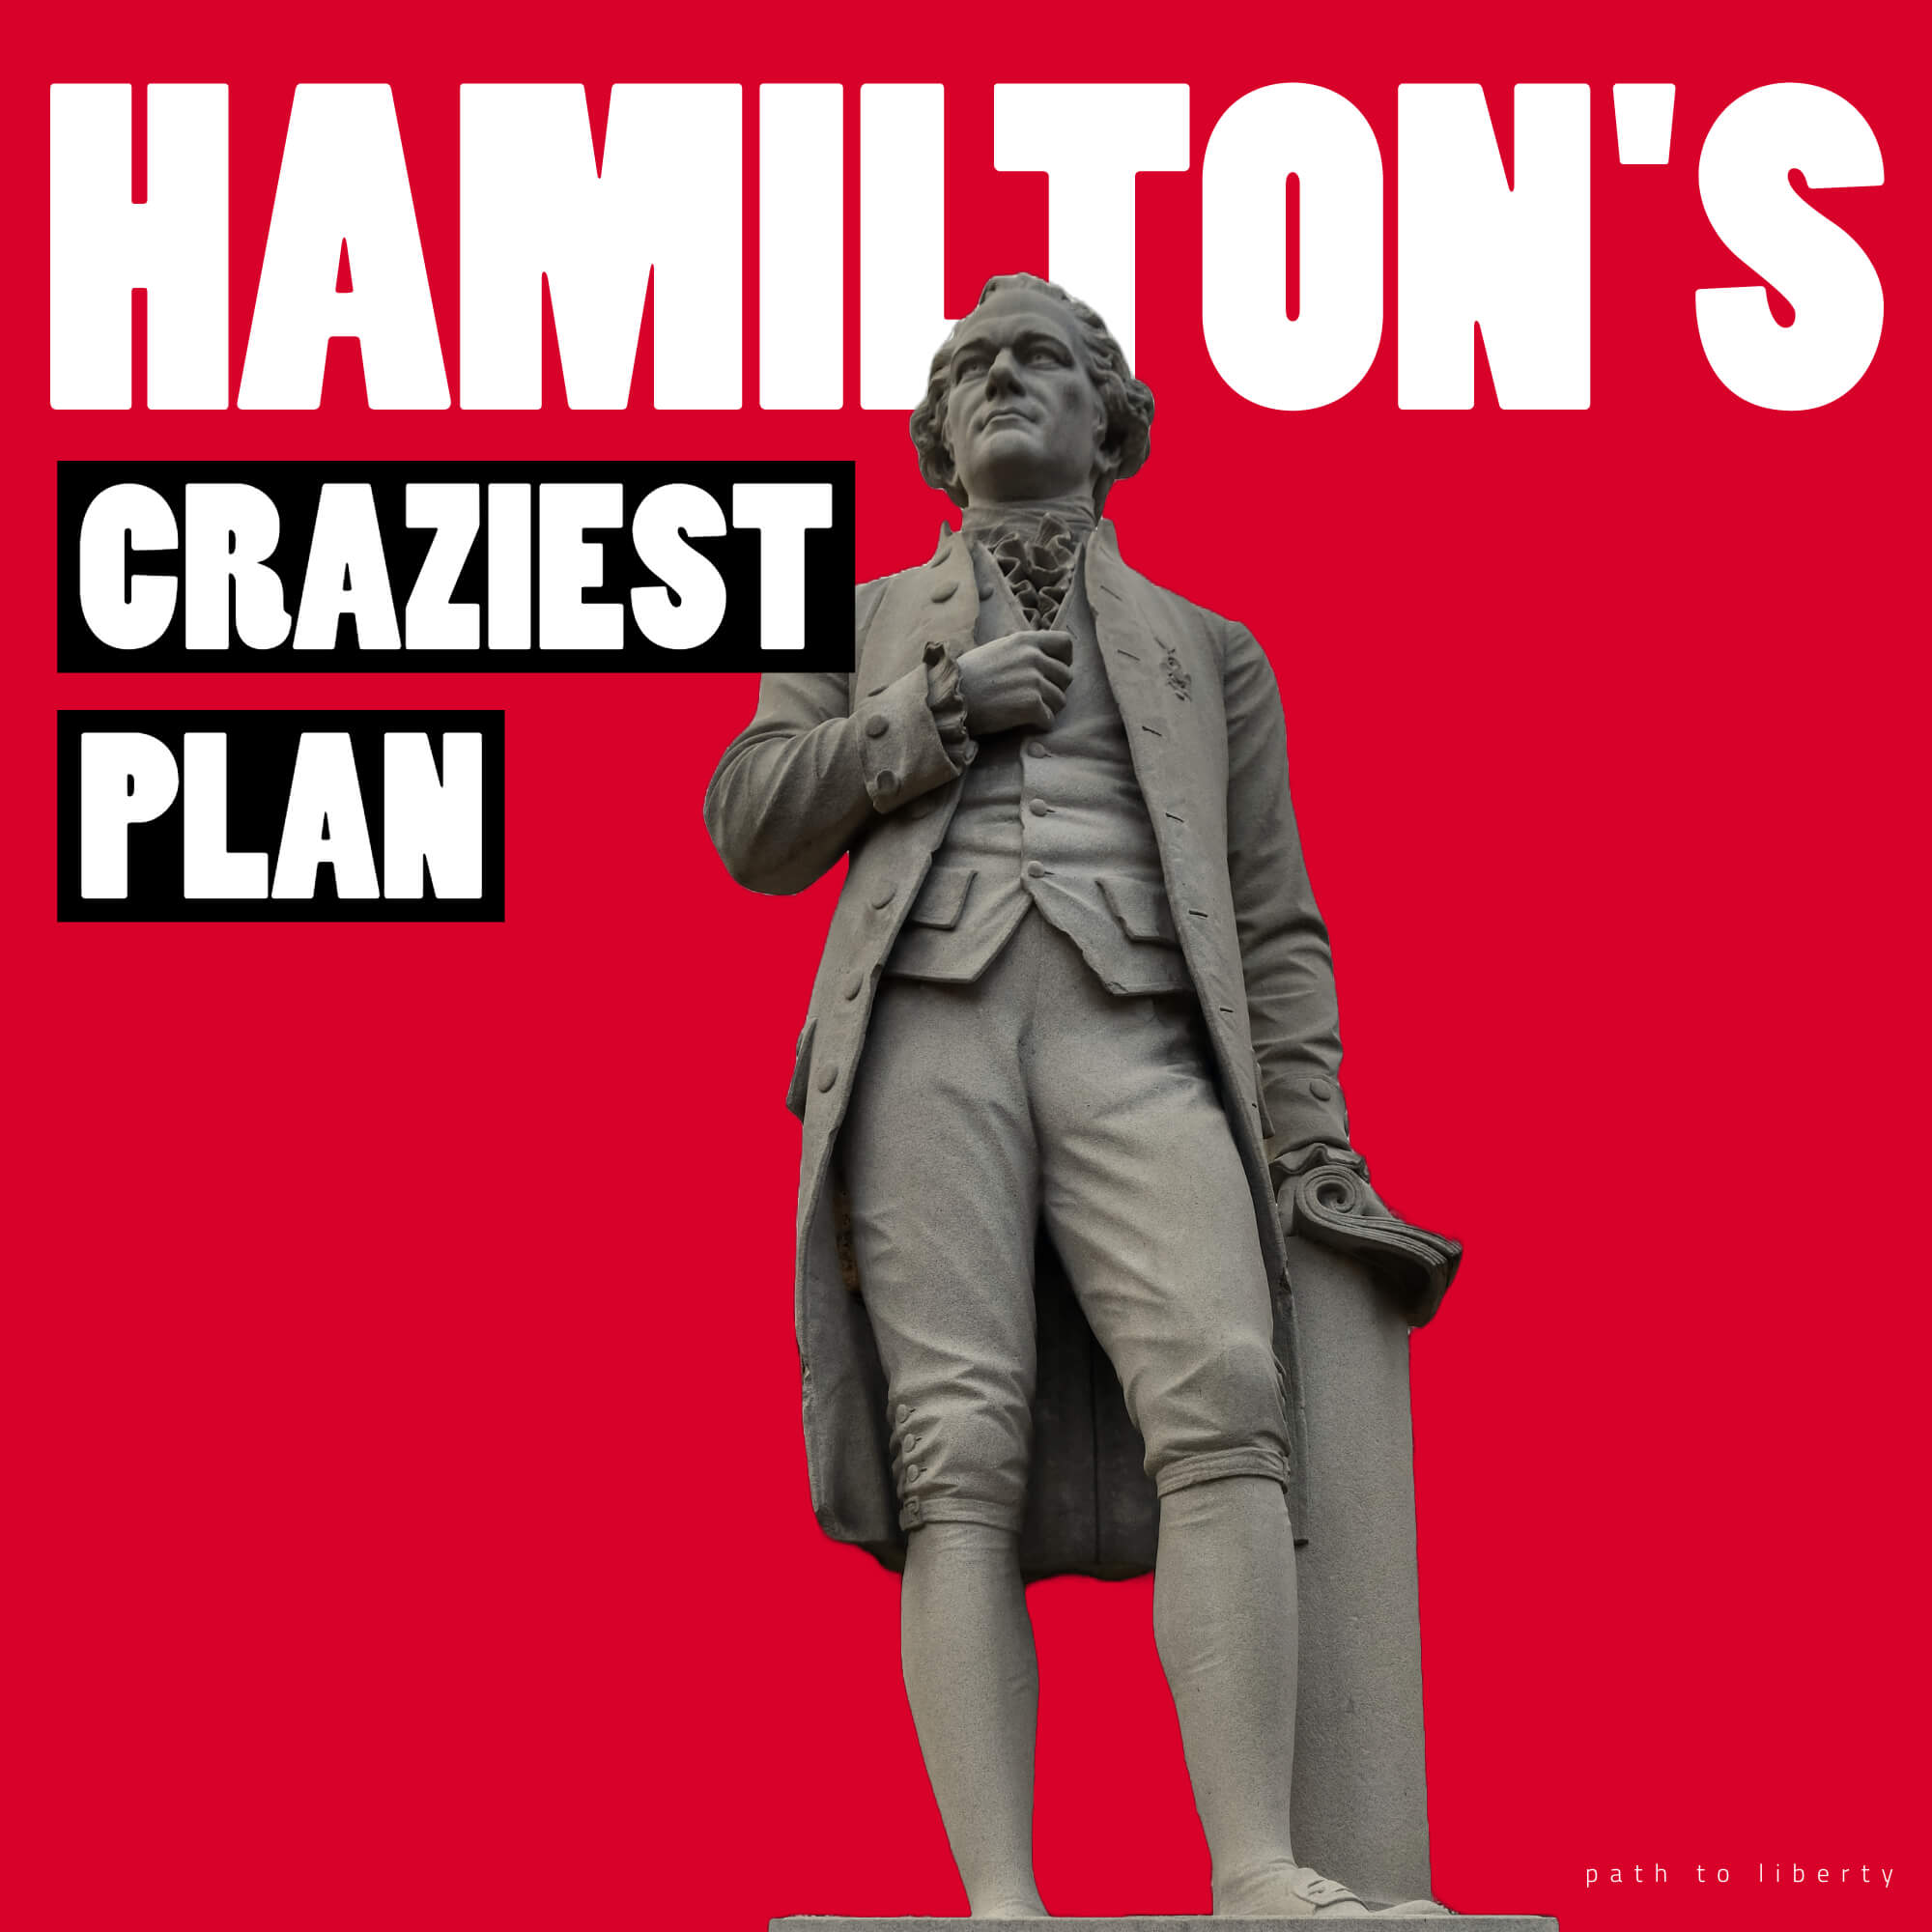 Alexander Hamilton’s Craziest Plan